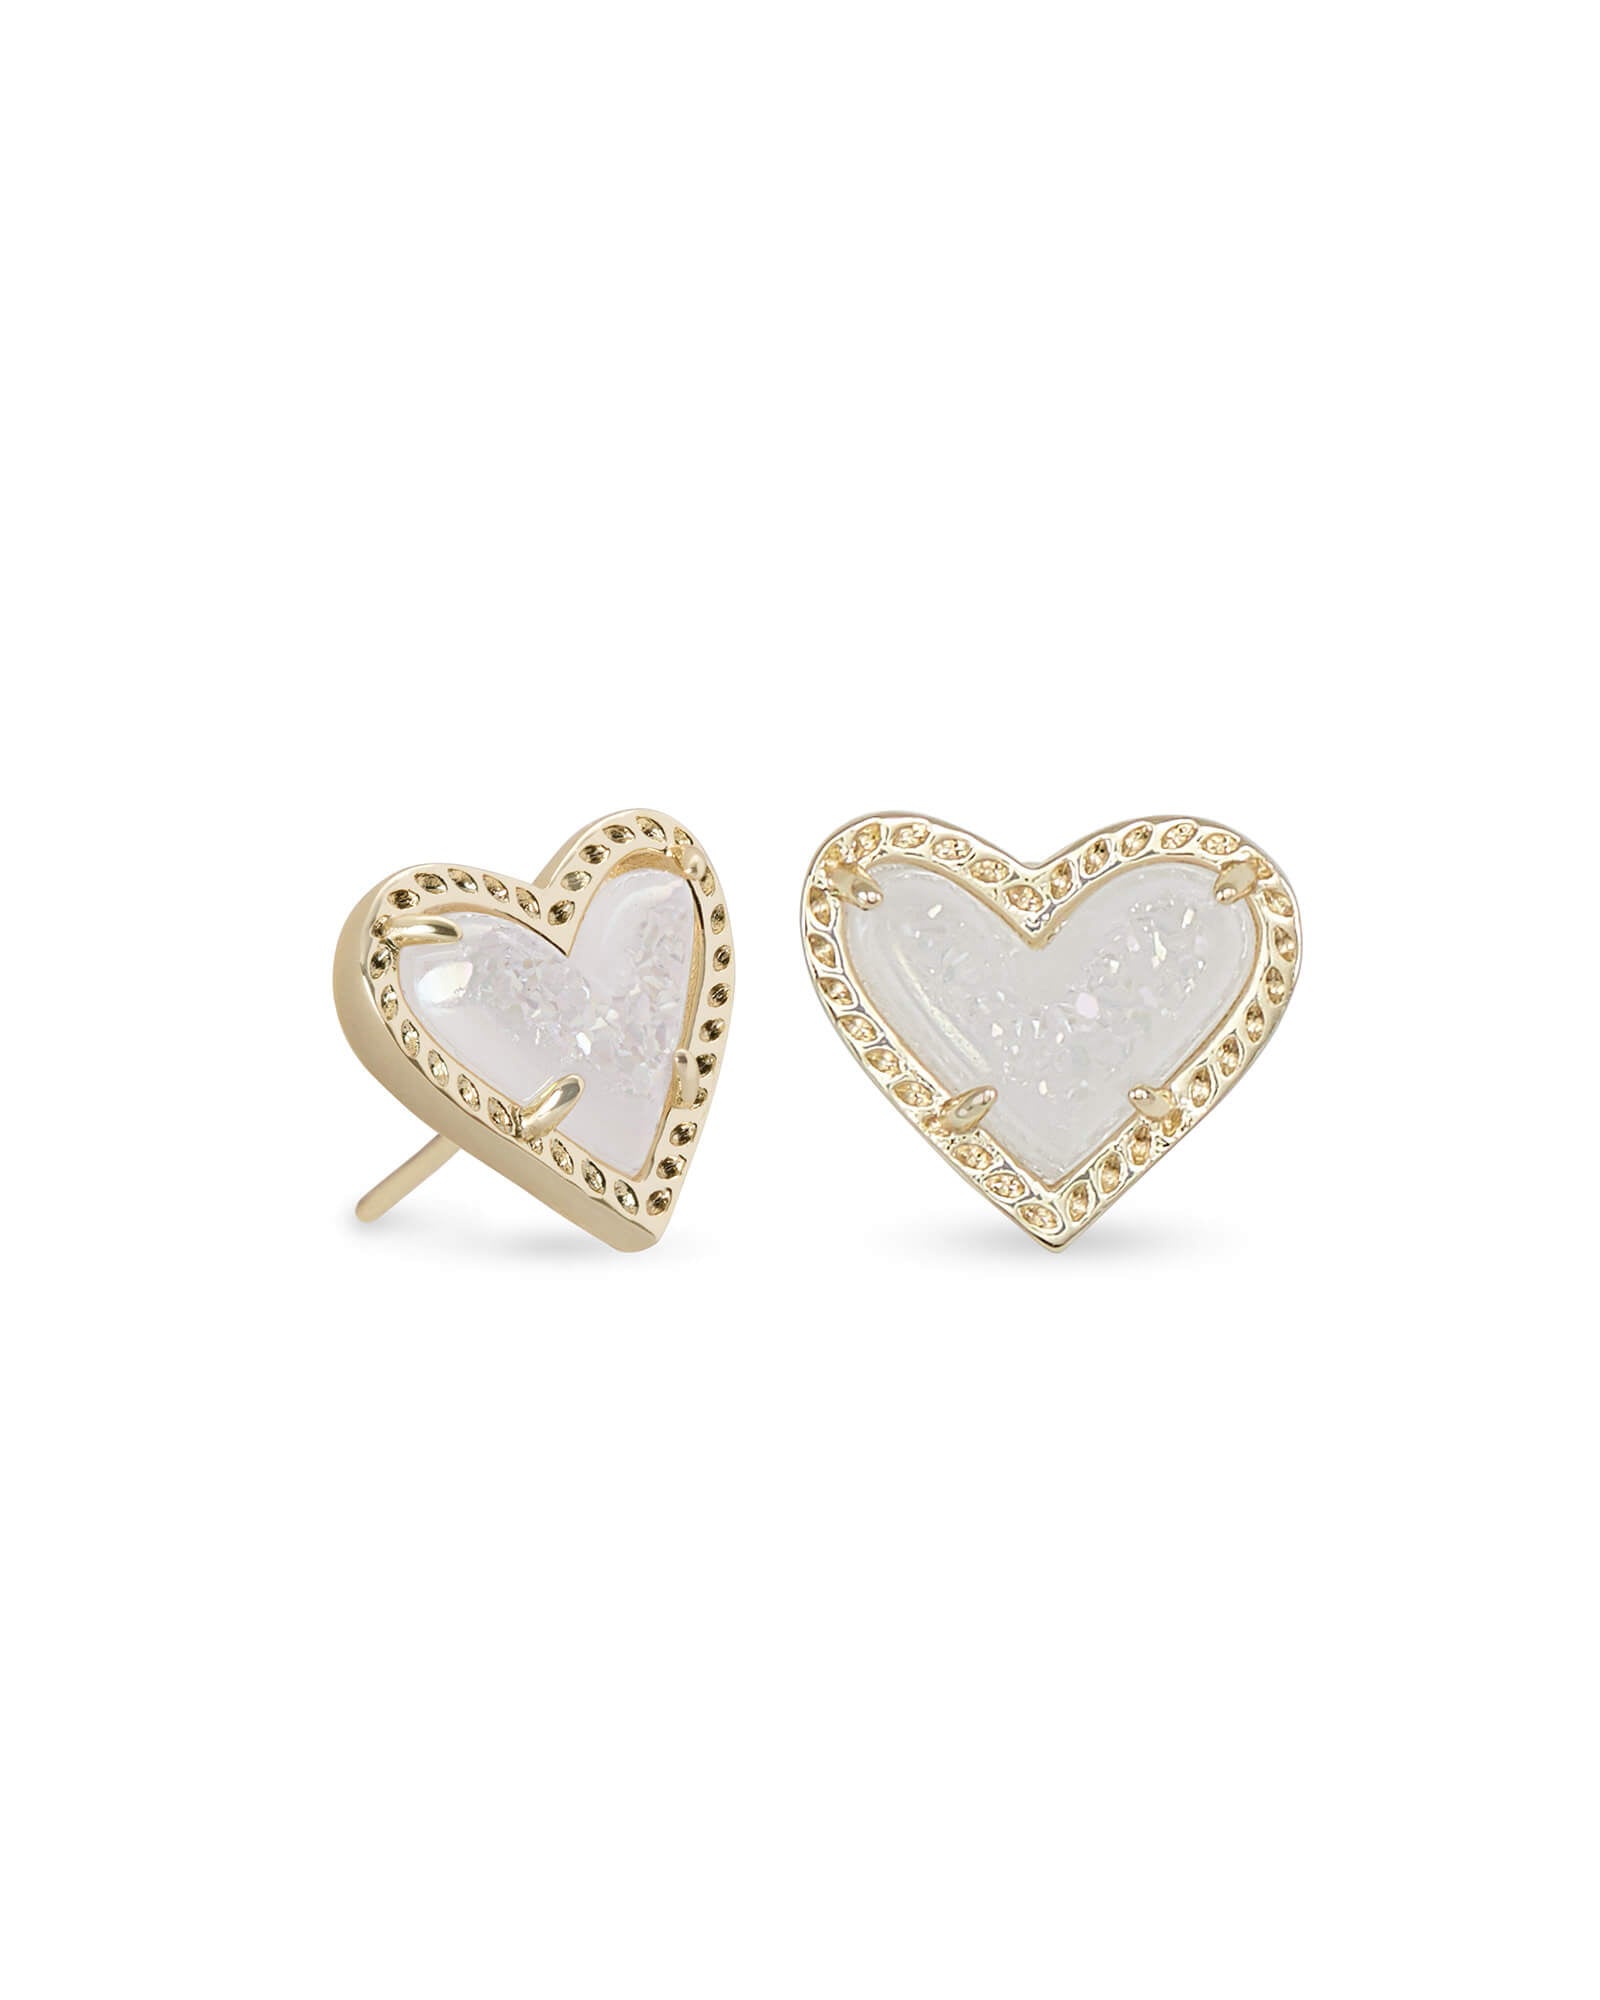 Kendra Scott Ari Heart Stud Earrings in Iridescent Drusy and Gold